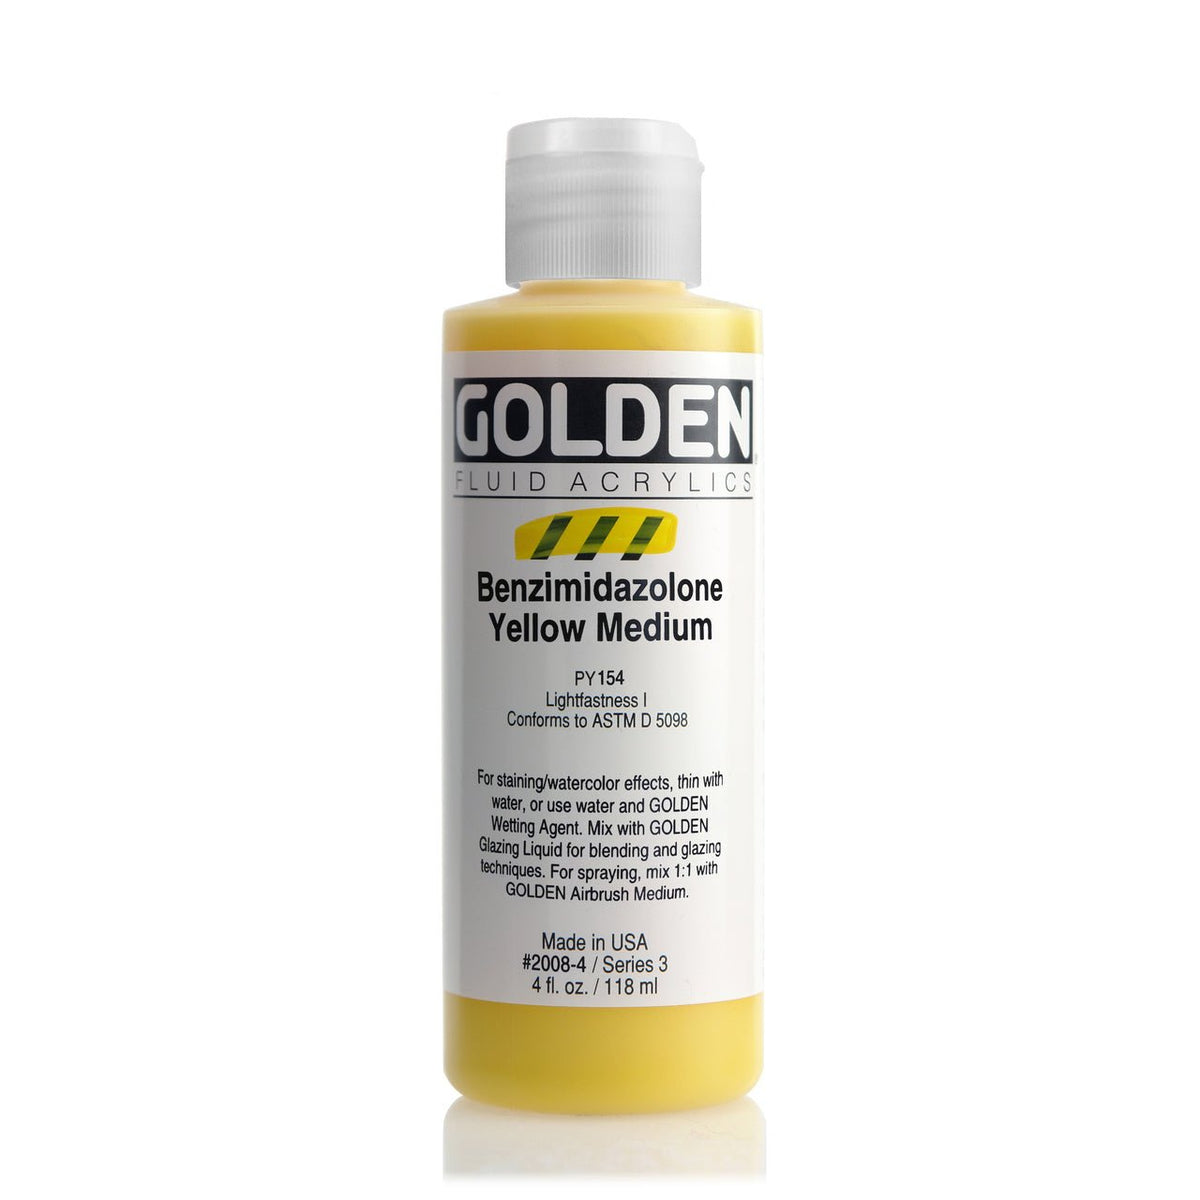 Golden Fluid Acrylic Benzimidazolone Yellow Medium 4 oz - merriartist.com